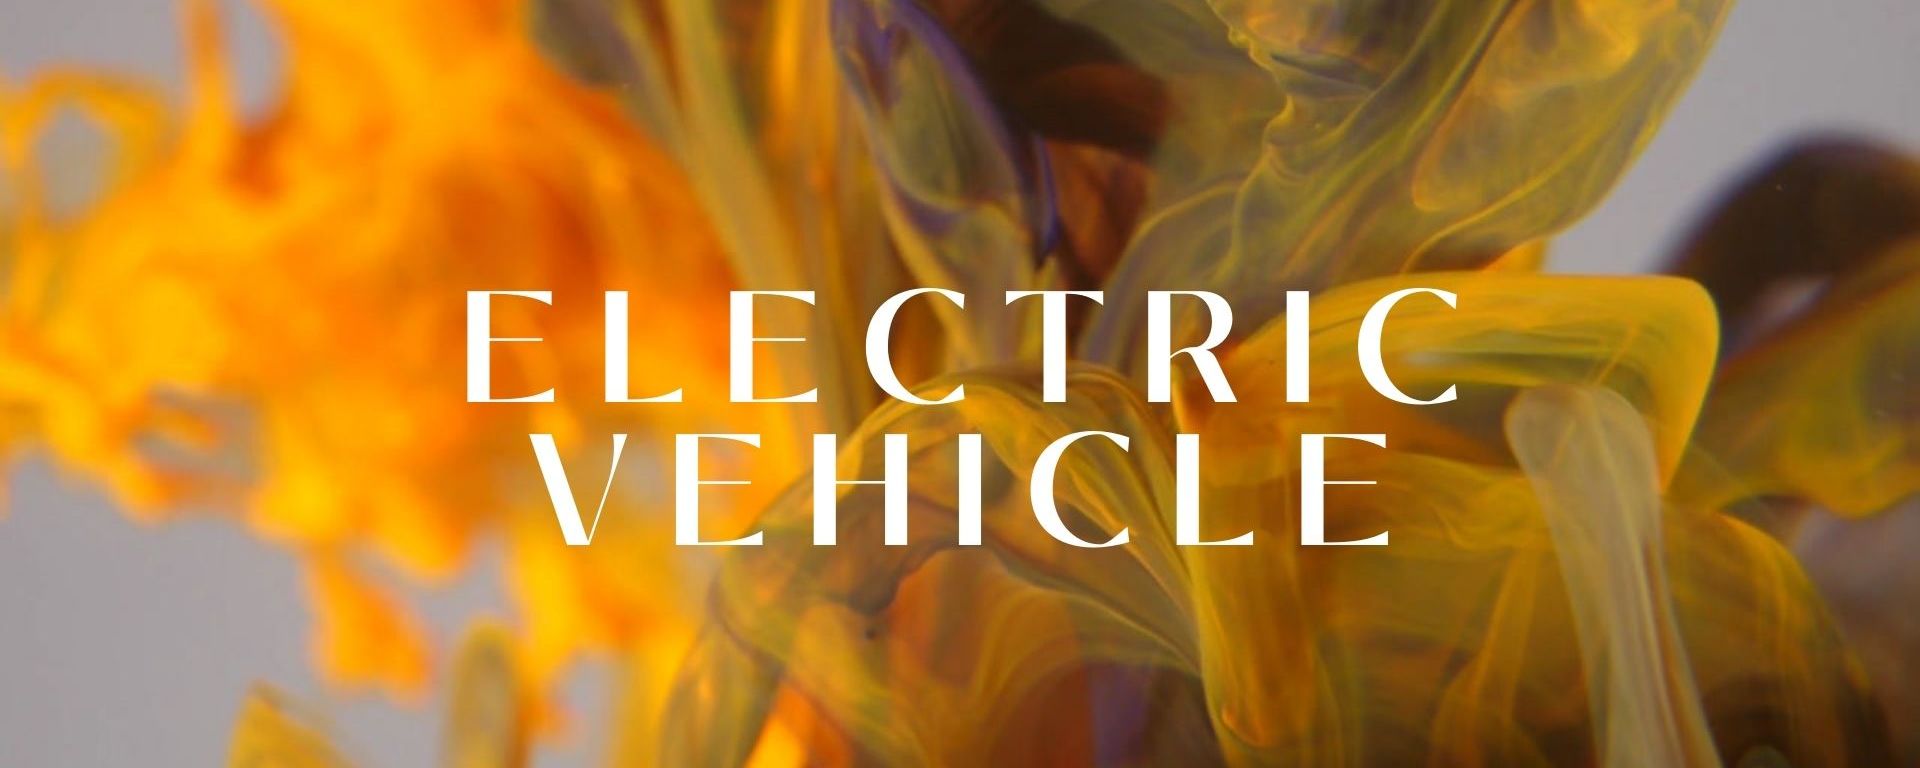 Electric vehicle 3 ledlights.blog